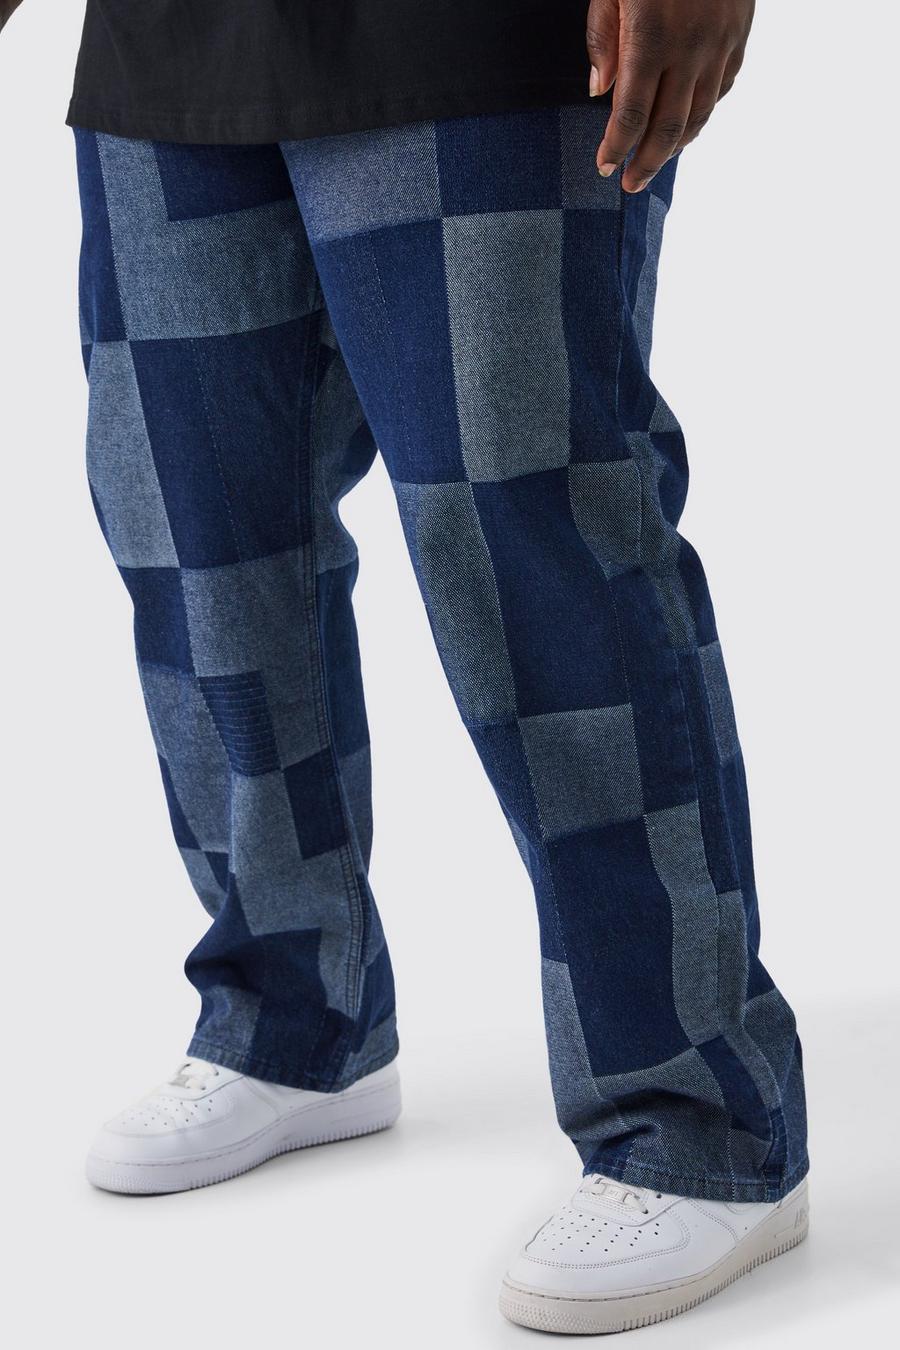 Jeans rilassati Plus Size in denim rigido effetto patchwork, Dark blue